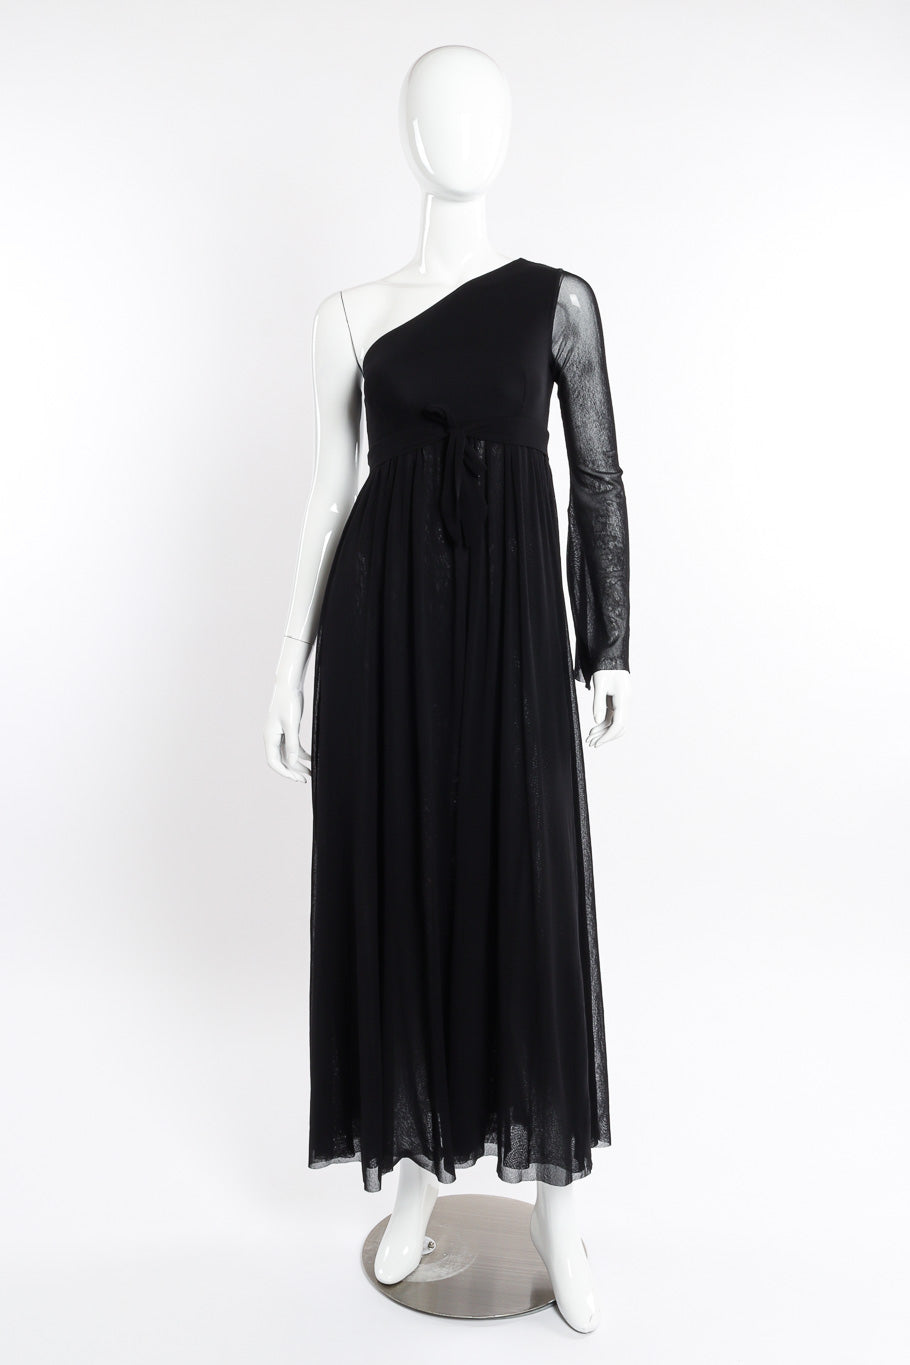 Jean Paul Gaultier Soleil One Shoulder Mesh Dress front view on mannequin @recessla